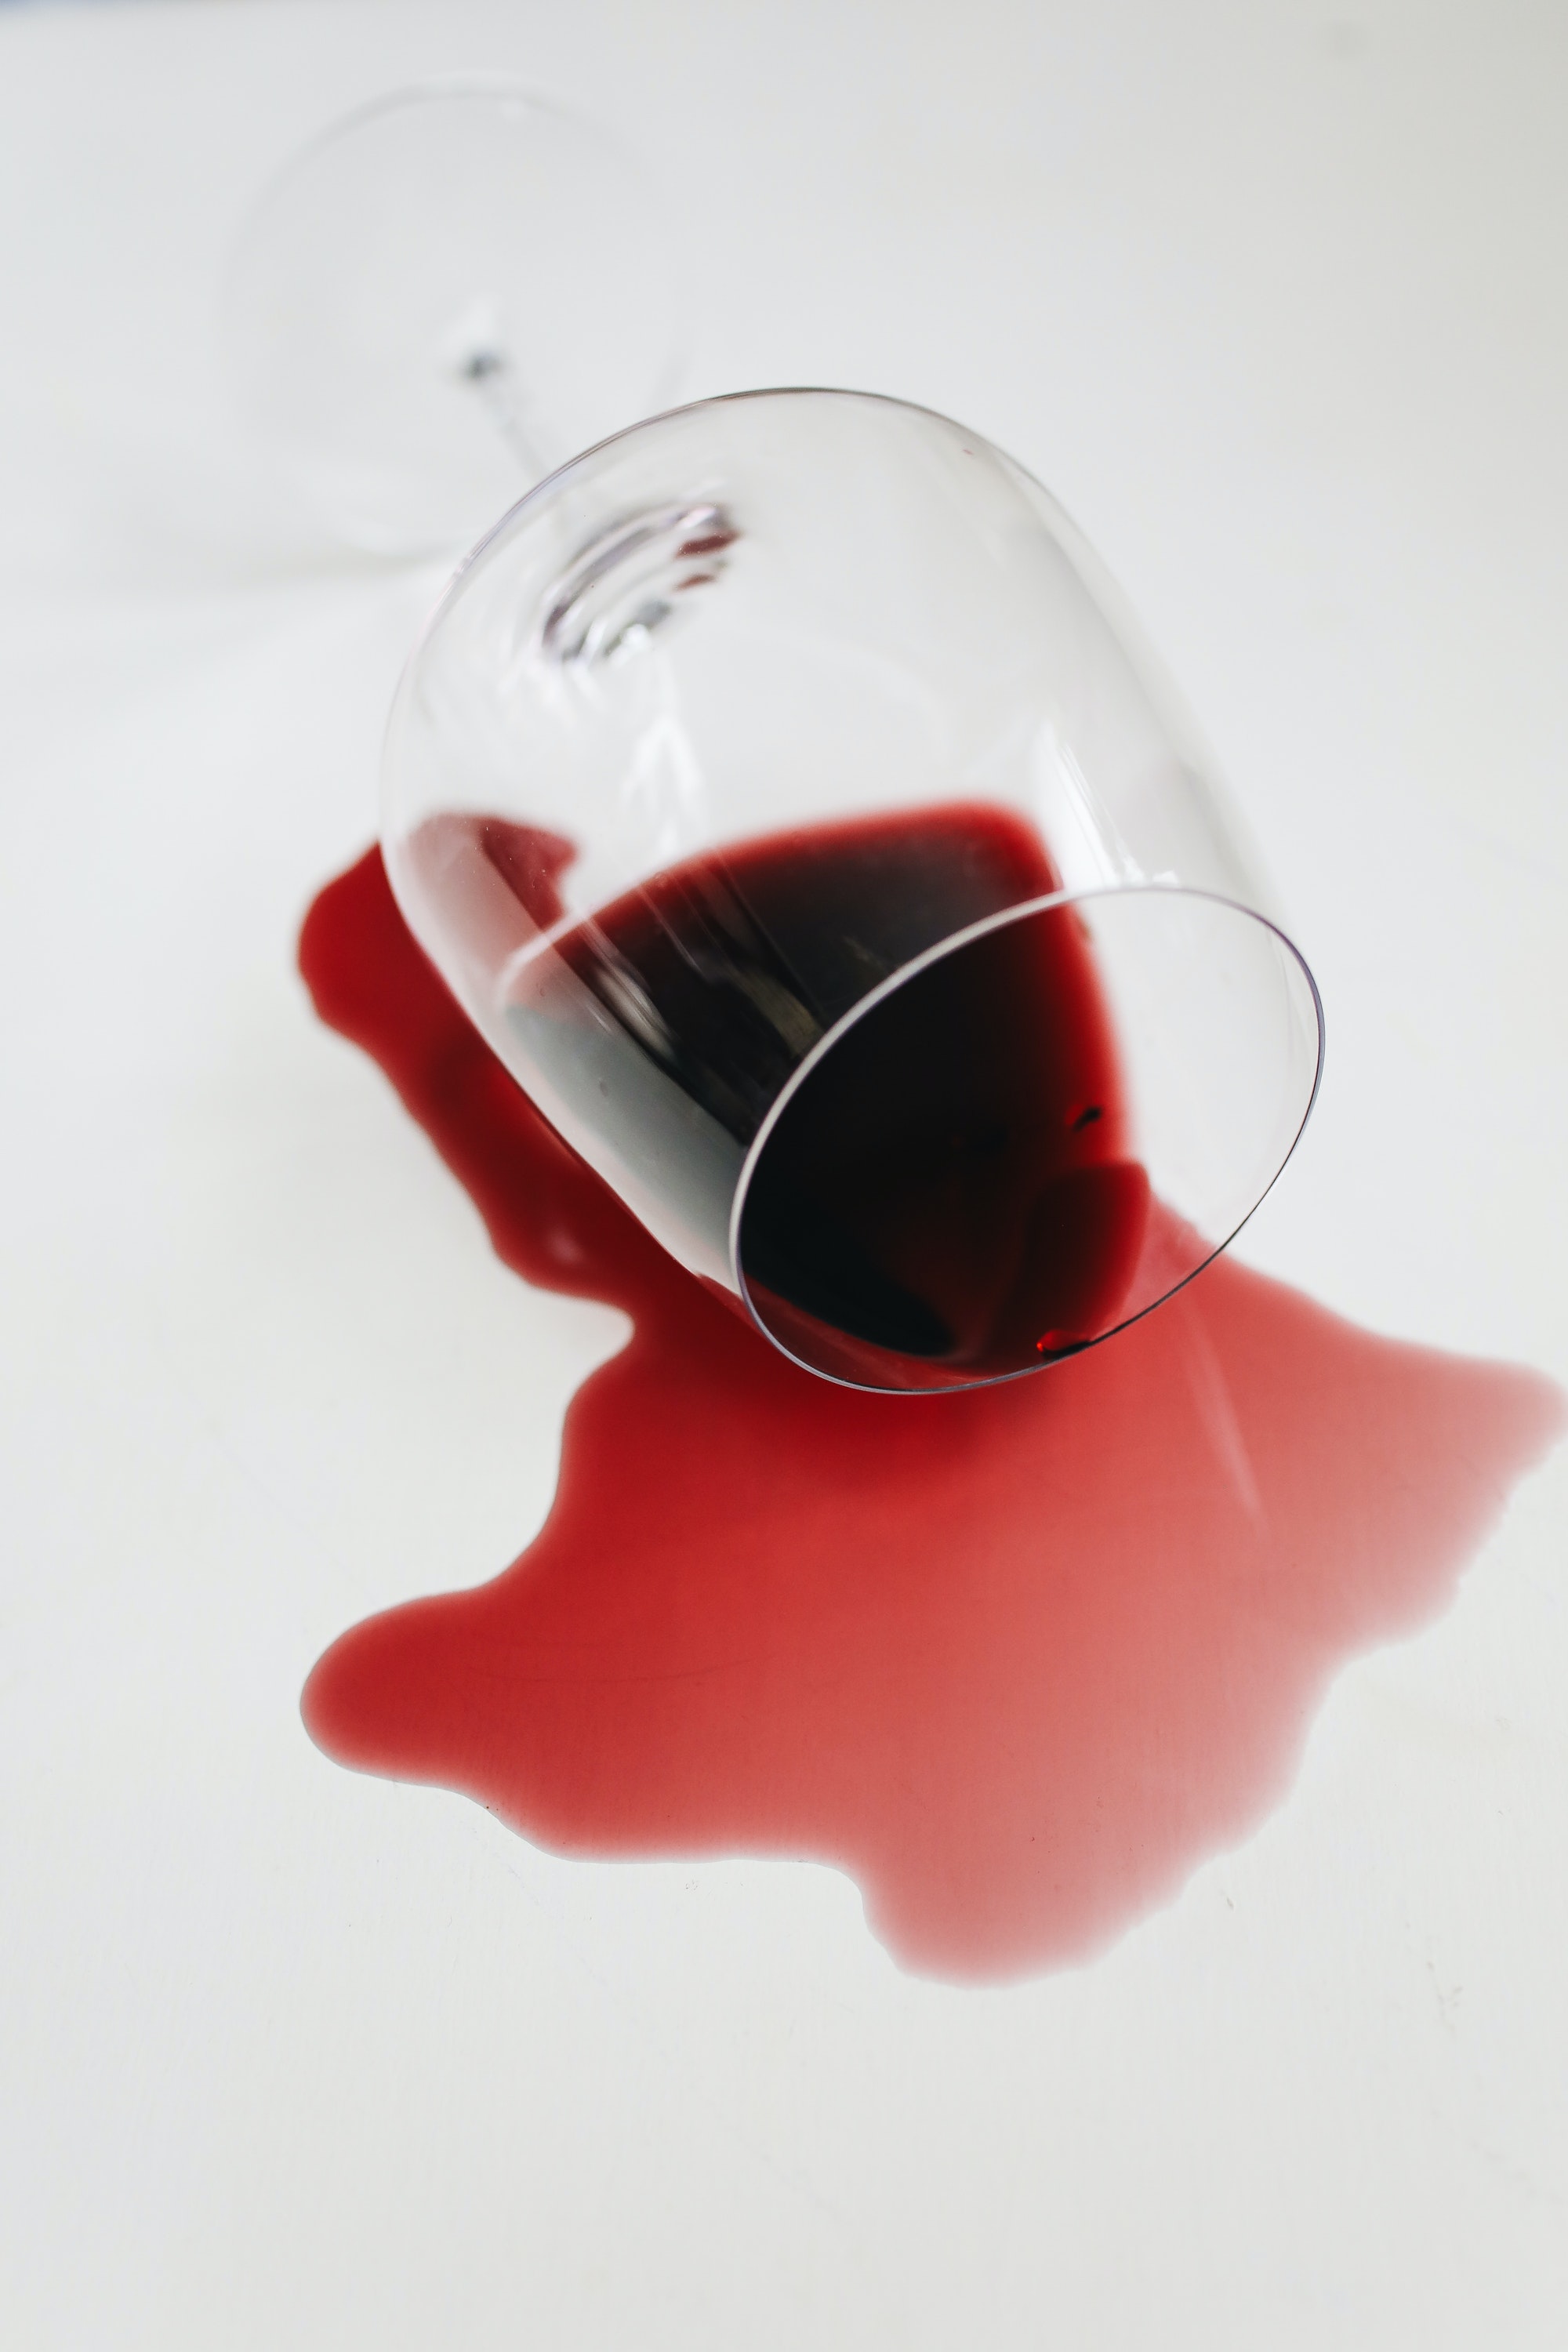 wine spill glass countertops Jockimo Glass Company